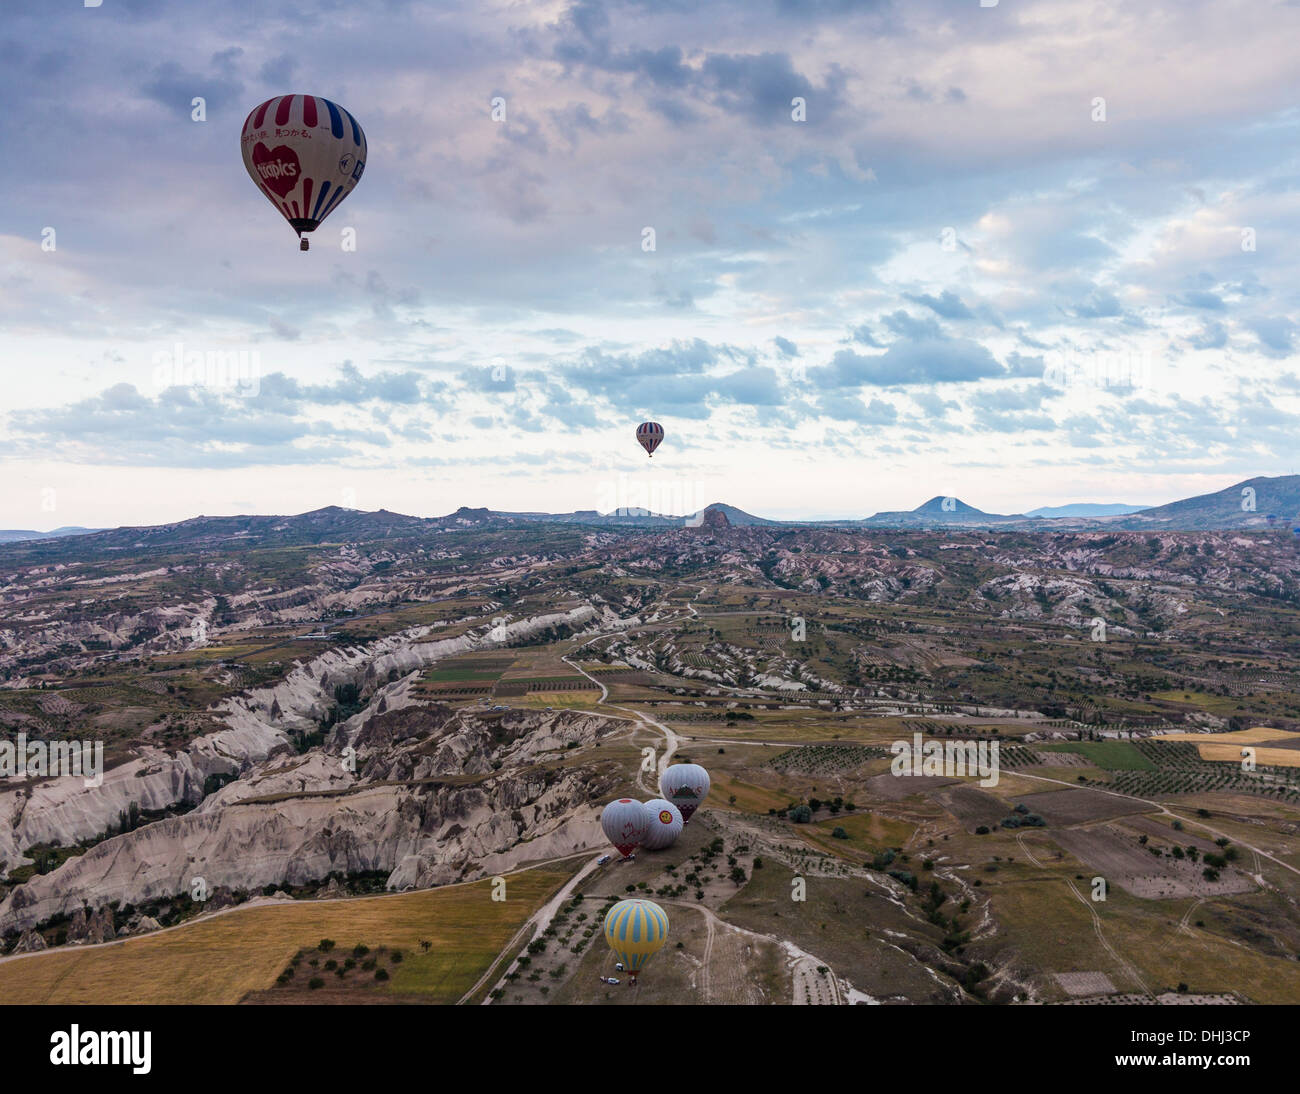 Cappadocia, eastern Anatolia, Turkey - balloon flights over the landscape Stock Photo